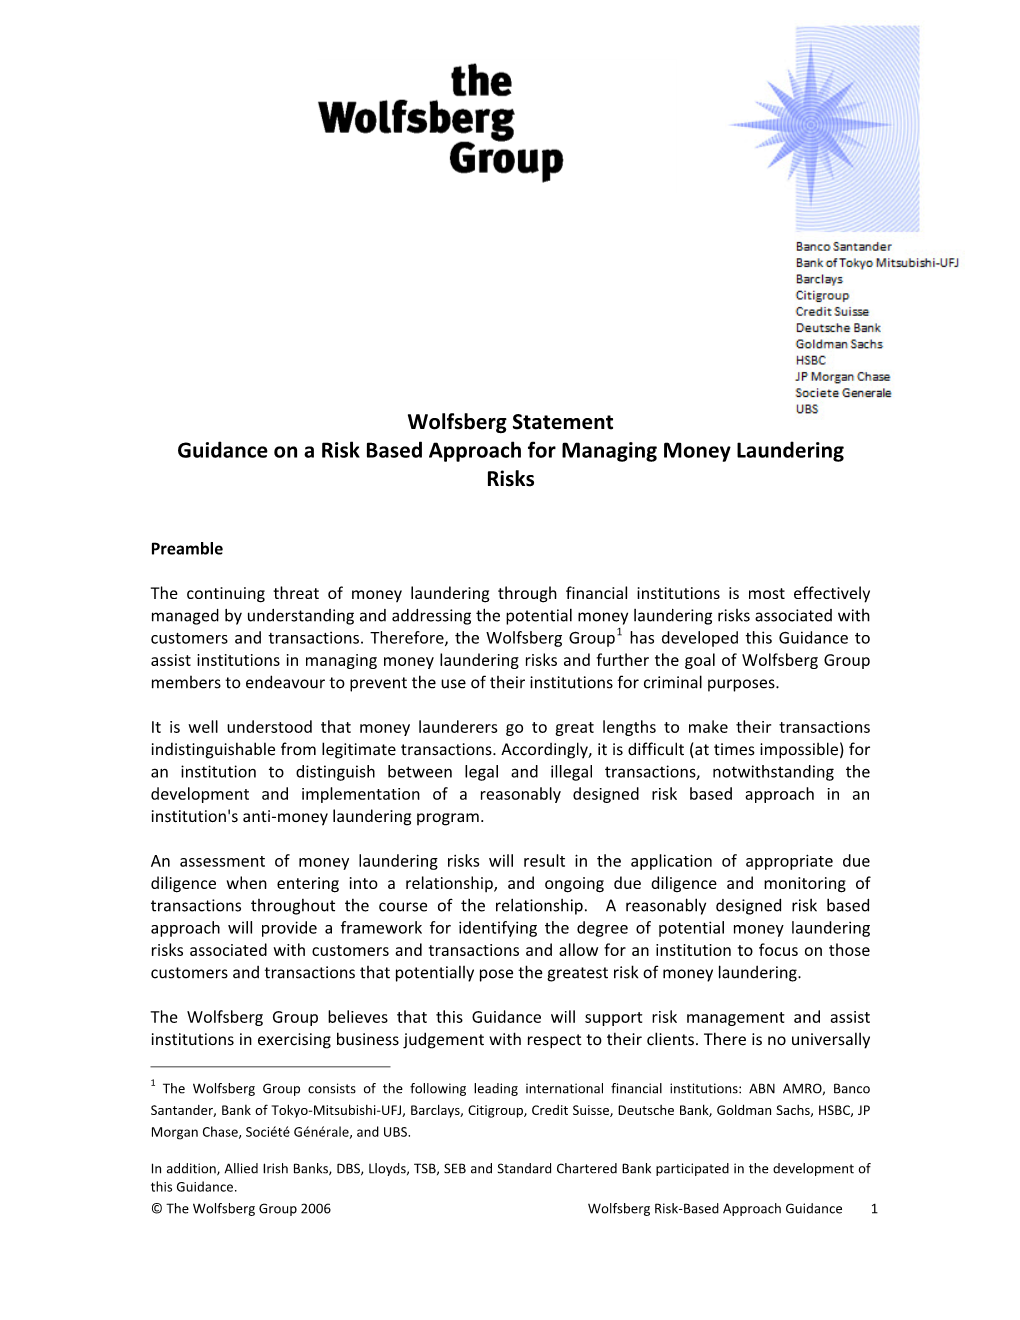 Wolfsberg Group RBA Guidance 2006